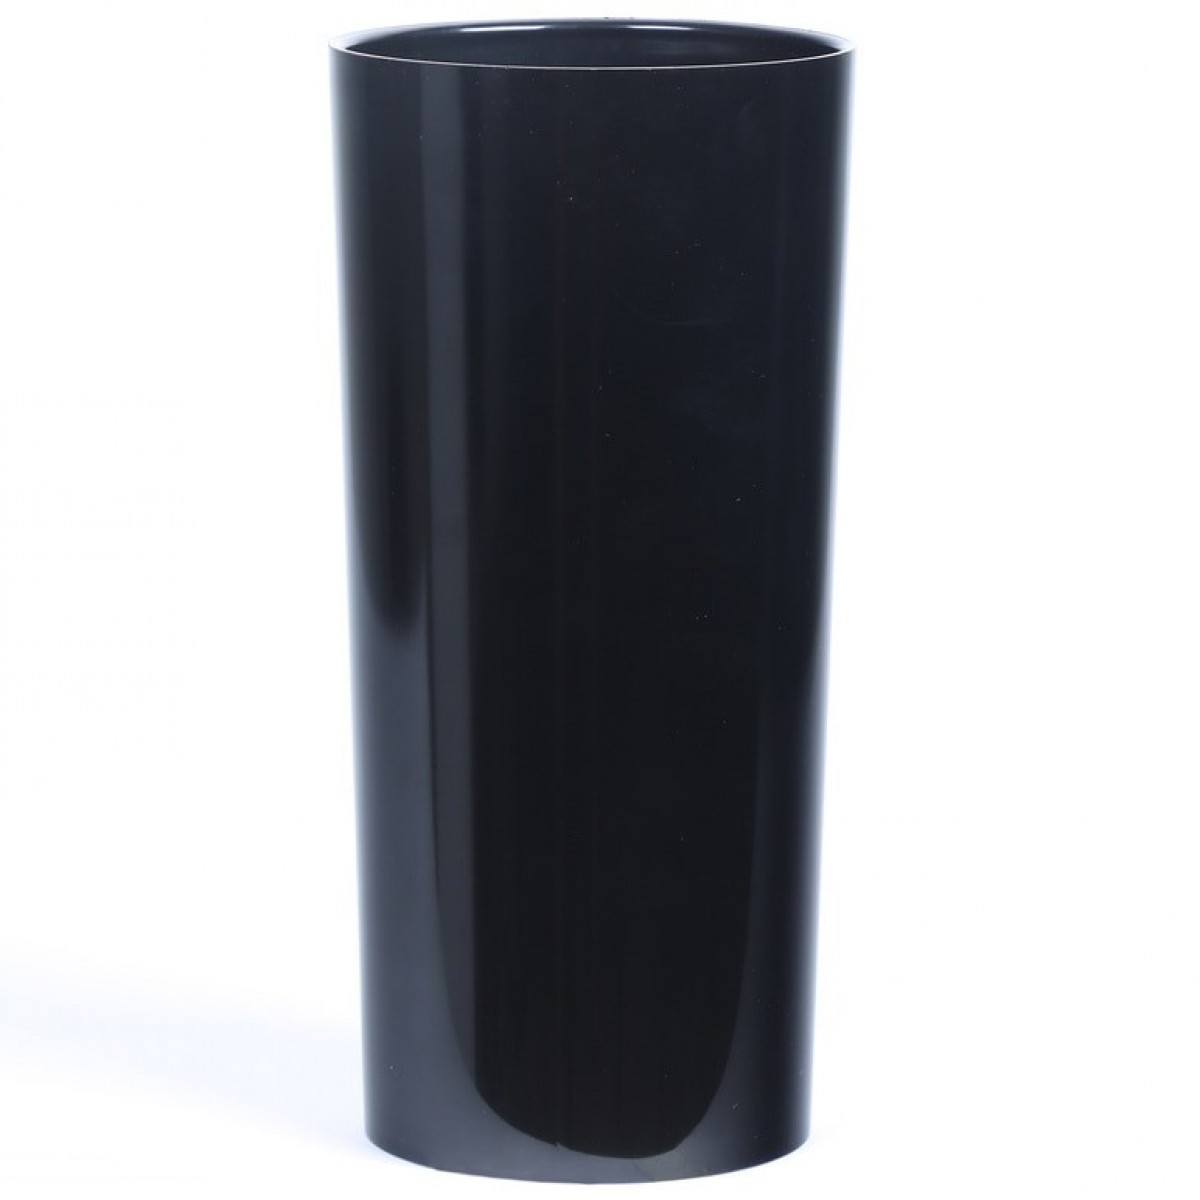 5117 Cylinder Black 12x25cm Acrylic Vase - 1 No